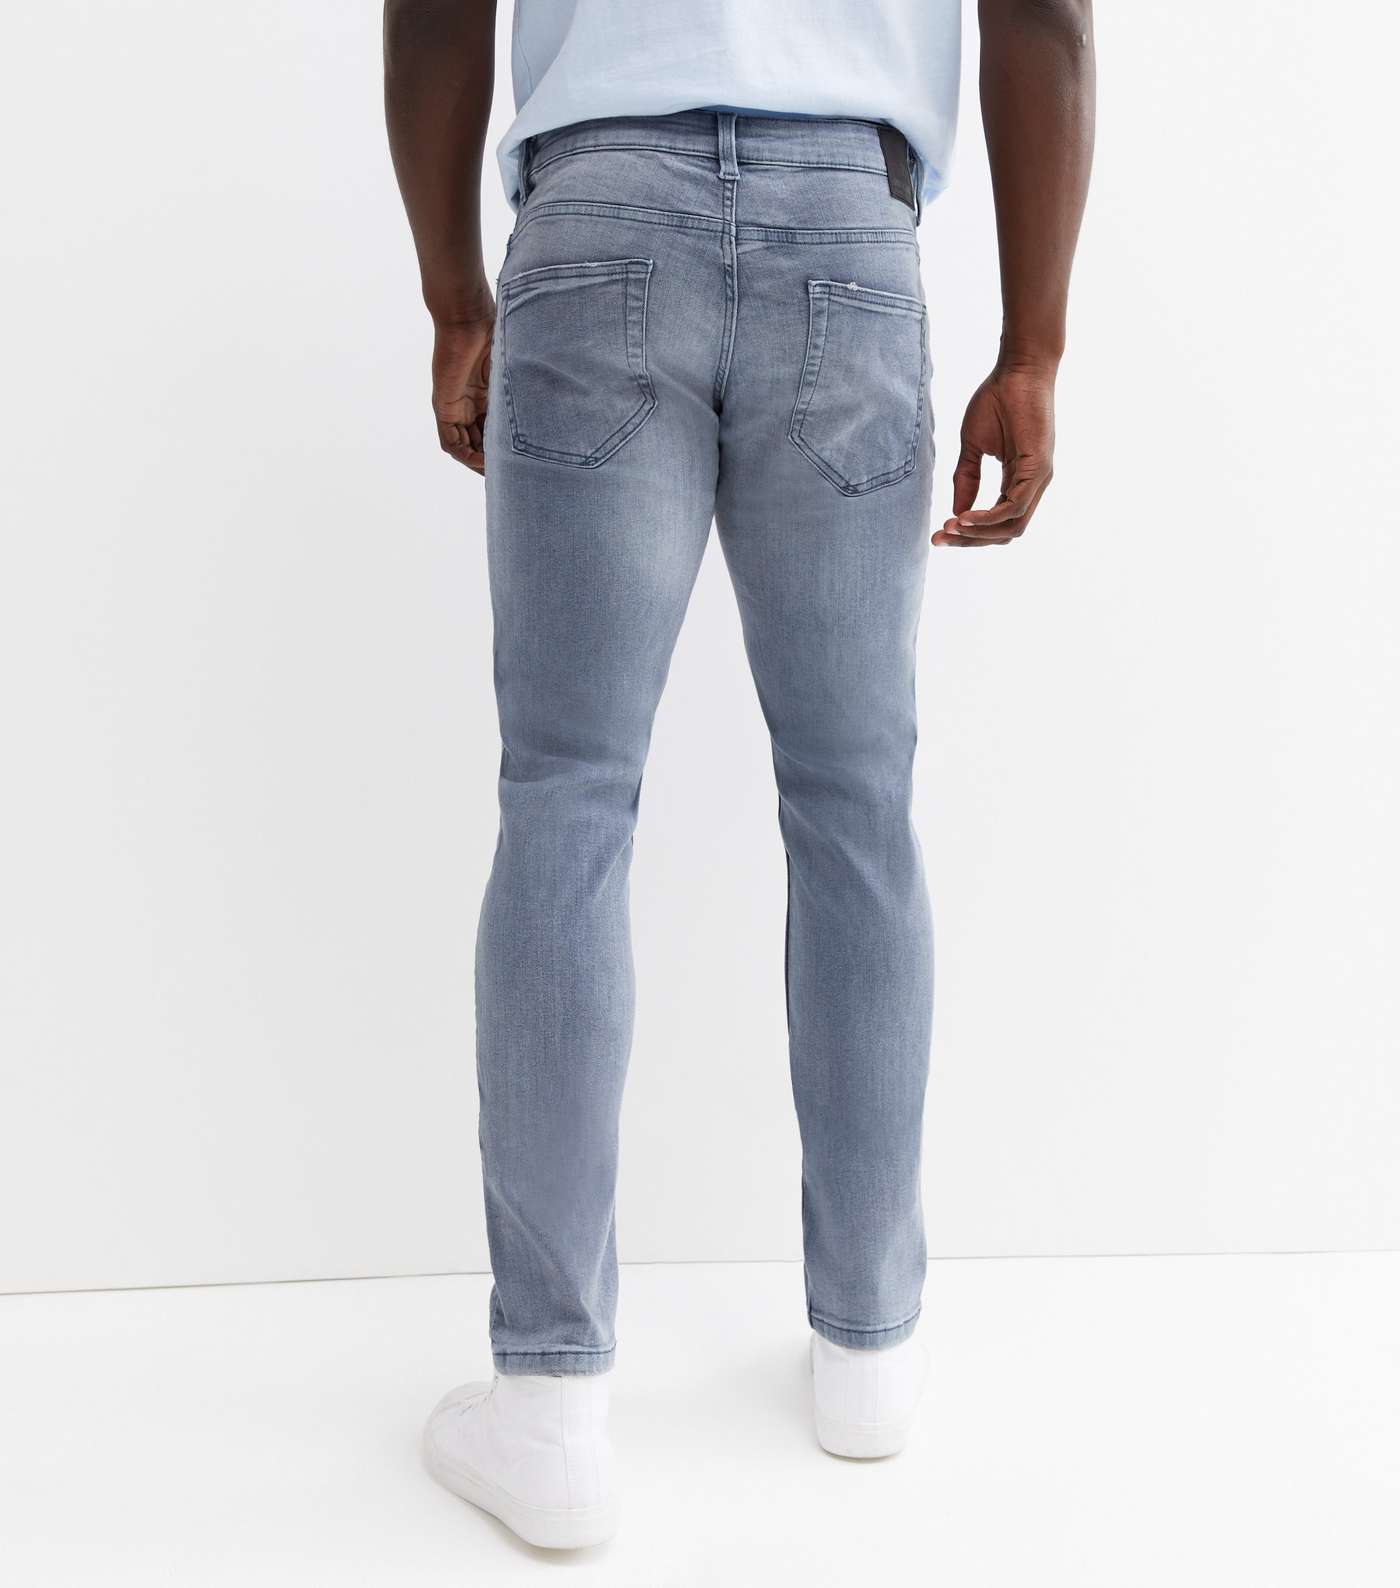 Only & Sons Grey Acid Wash Slim Fit Jeans Image 3